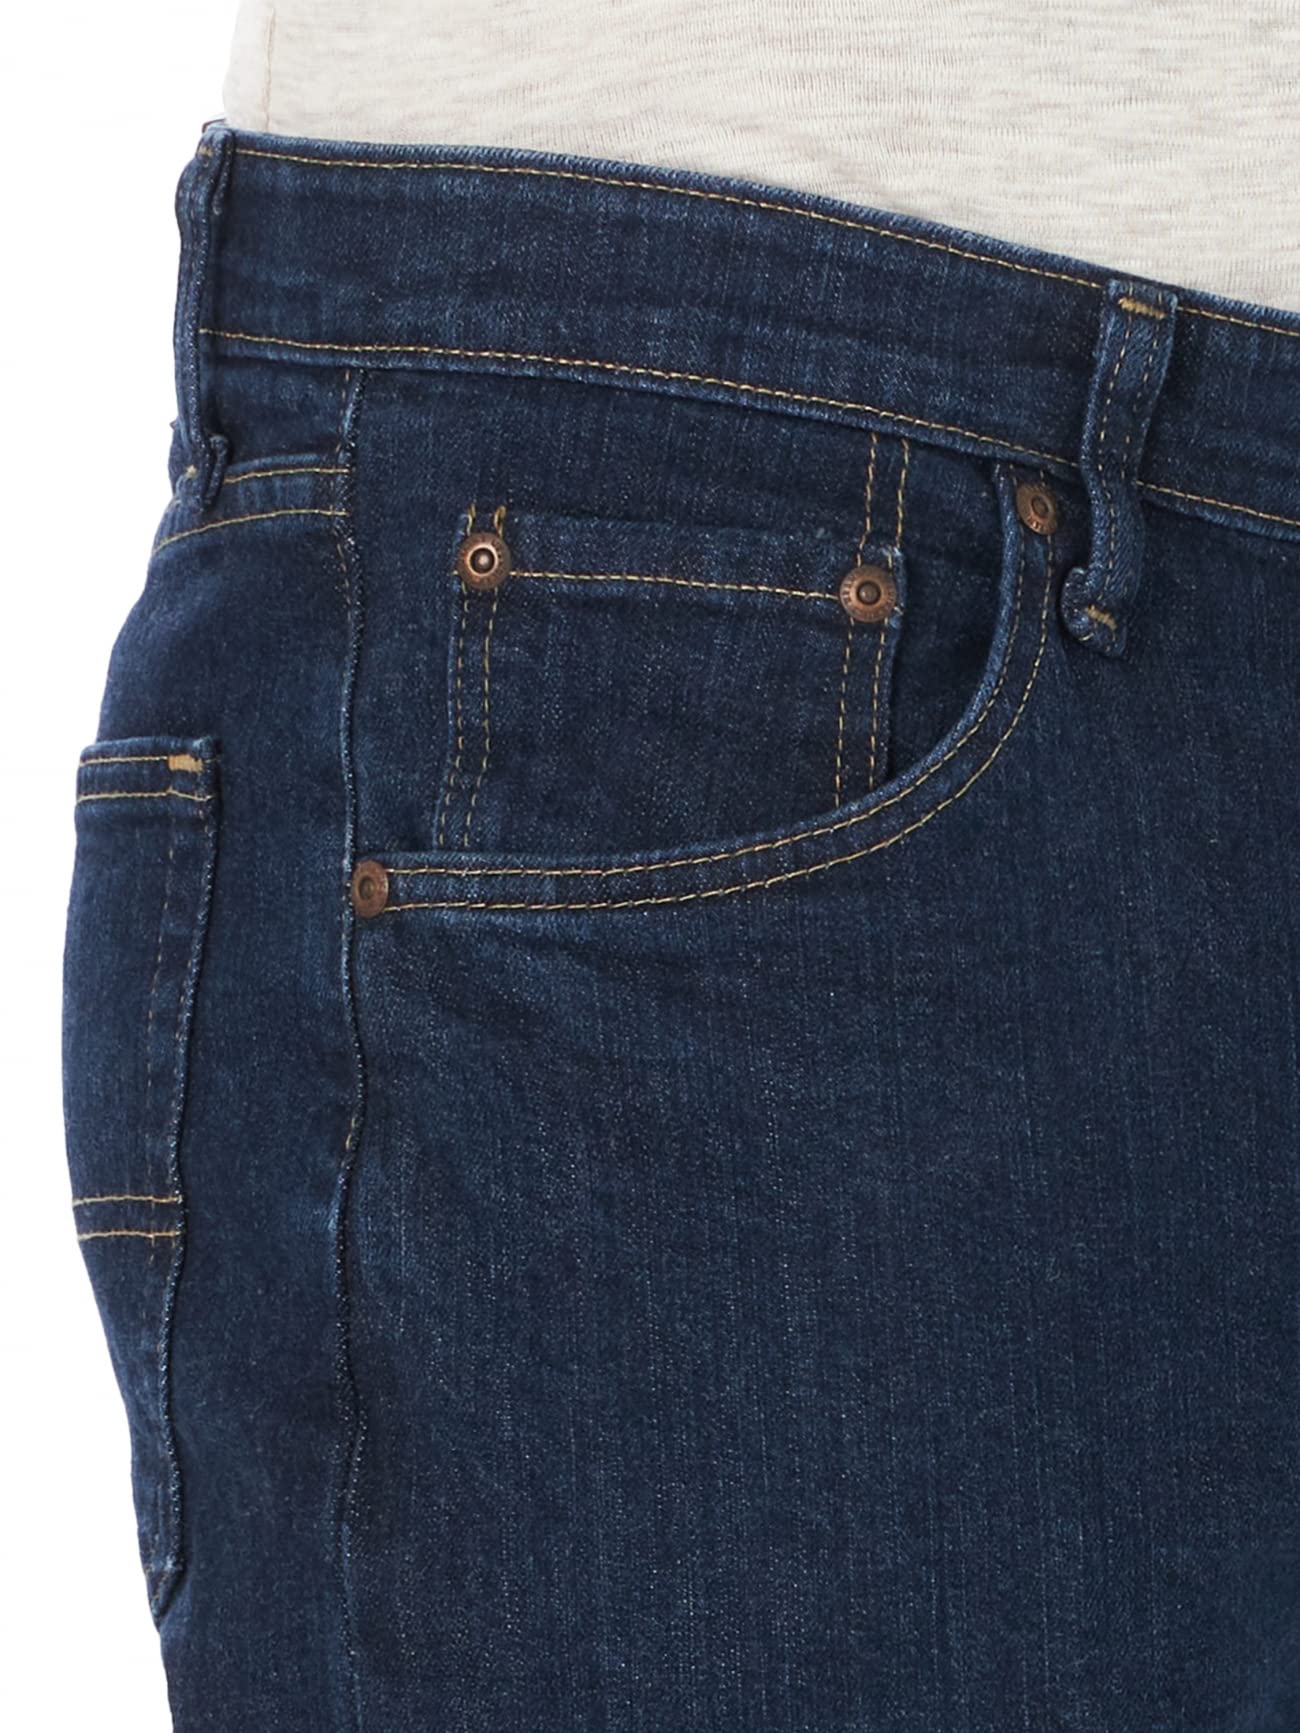 Wrangler Authentics Men's Regular Fit Comfort Flex Waist Jean, Dark Indigo, 36W x 32L